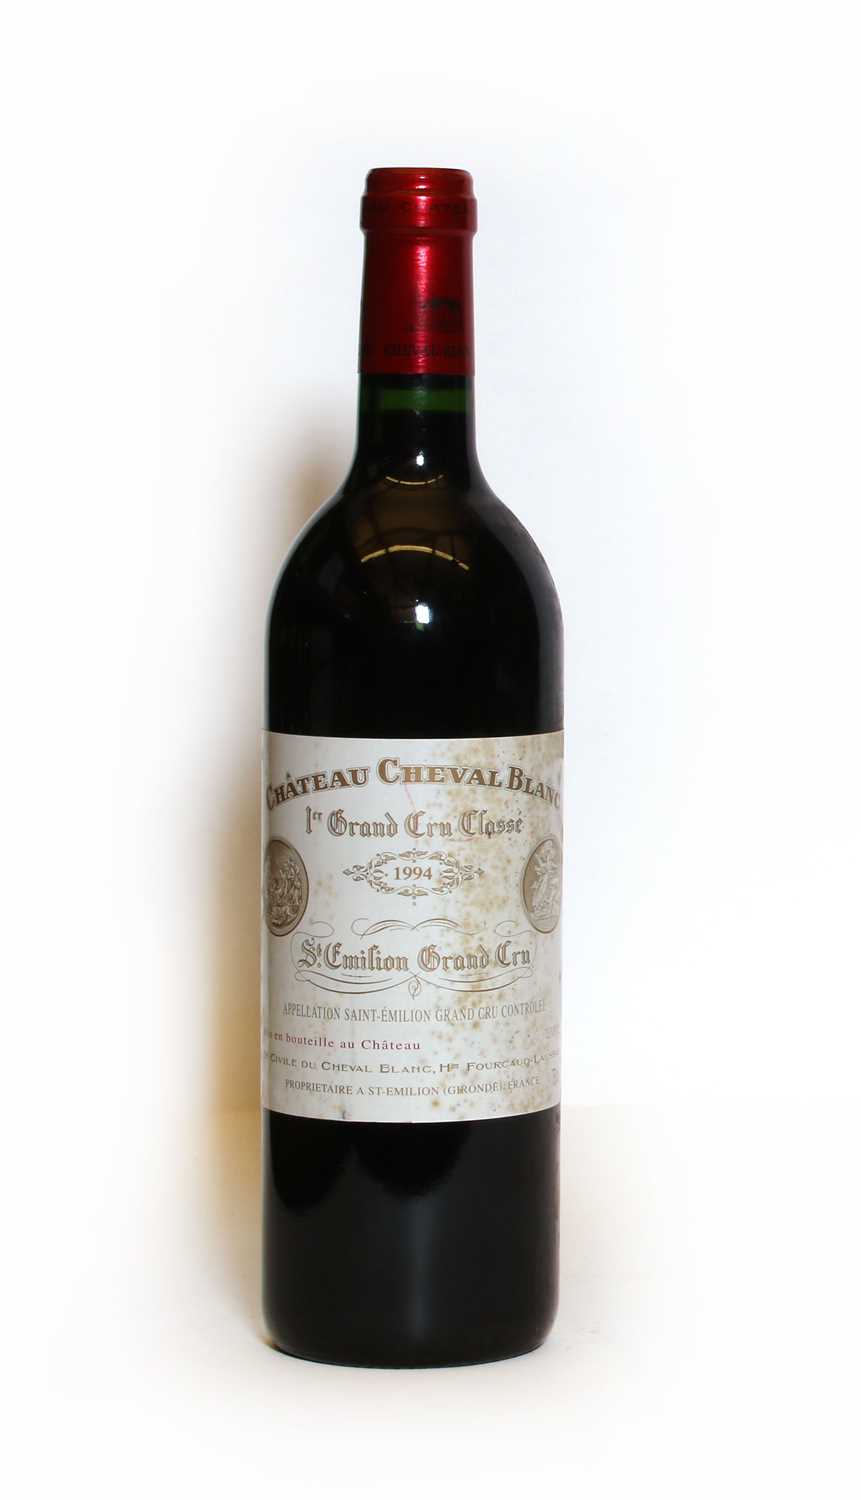 Lot 62 - Chateau Cheval Blanc, Saint-Emilion 1er Grand Cru Classe, 1994, one bottle